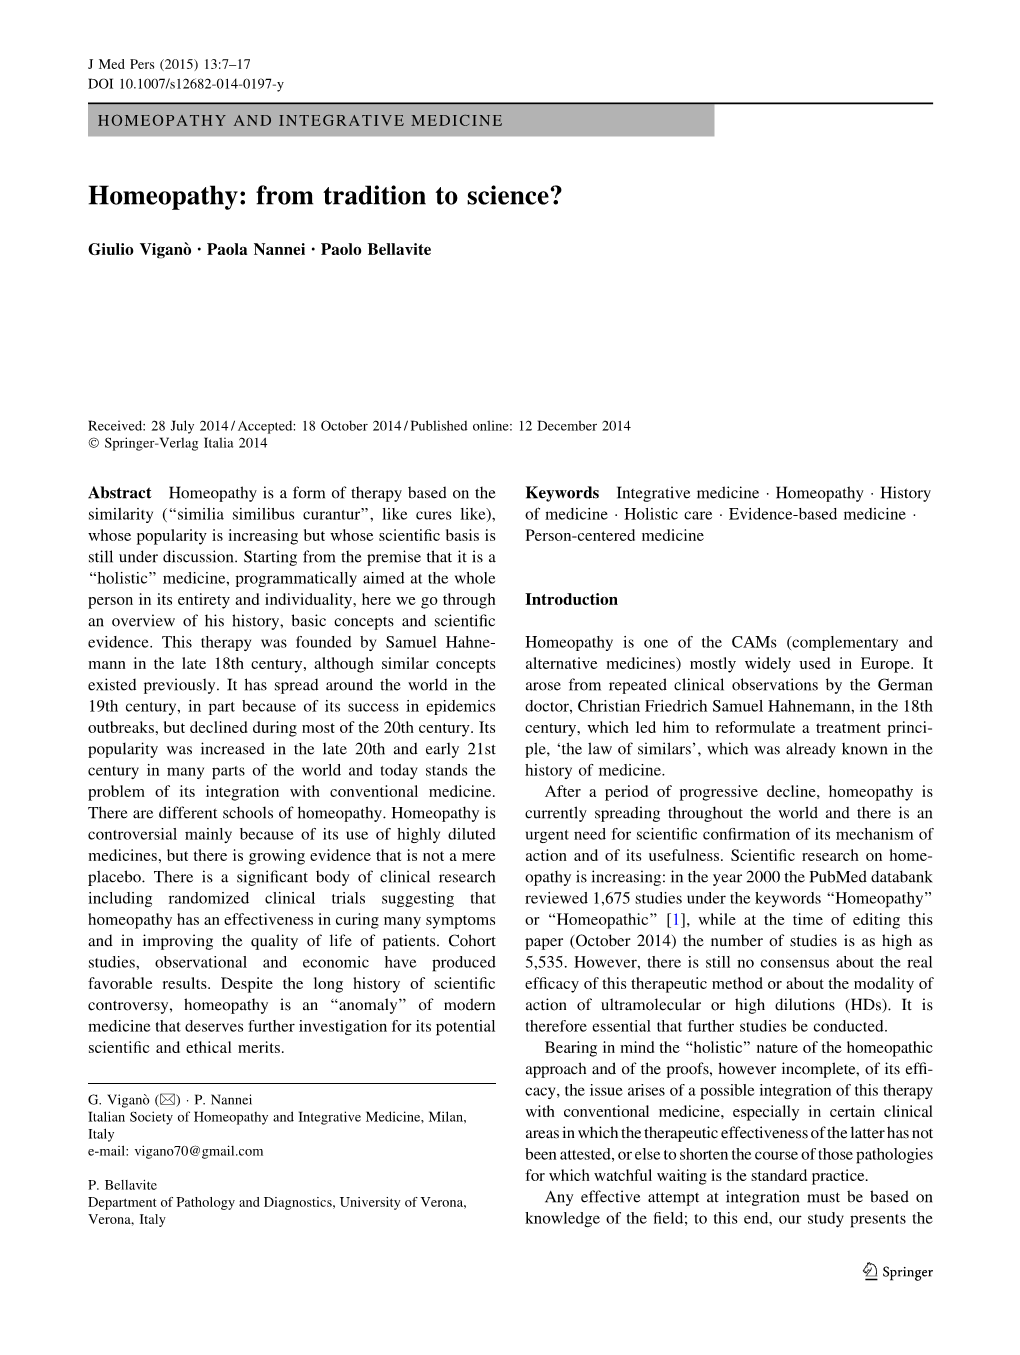 Homeopathy and Integrative Medicine